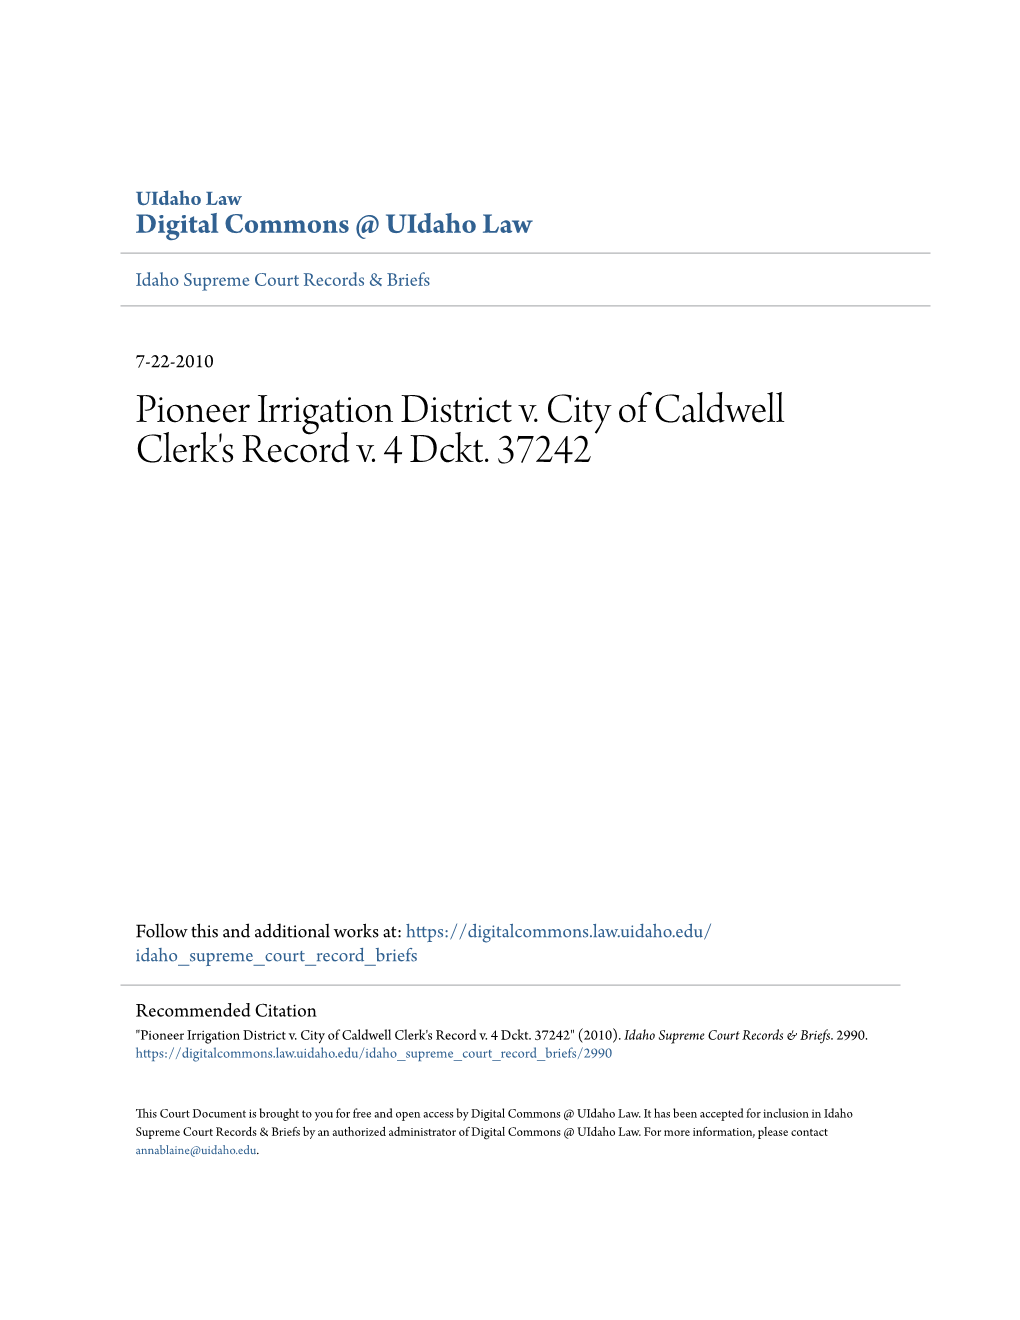 Pioneer Irrigation District V. City of Caldwell Clerk's Record V. 4 Dckt